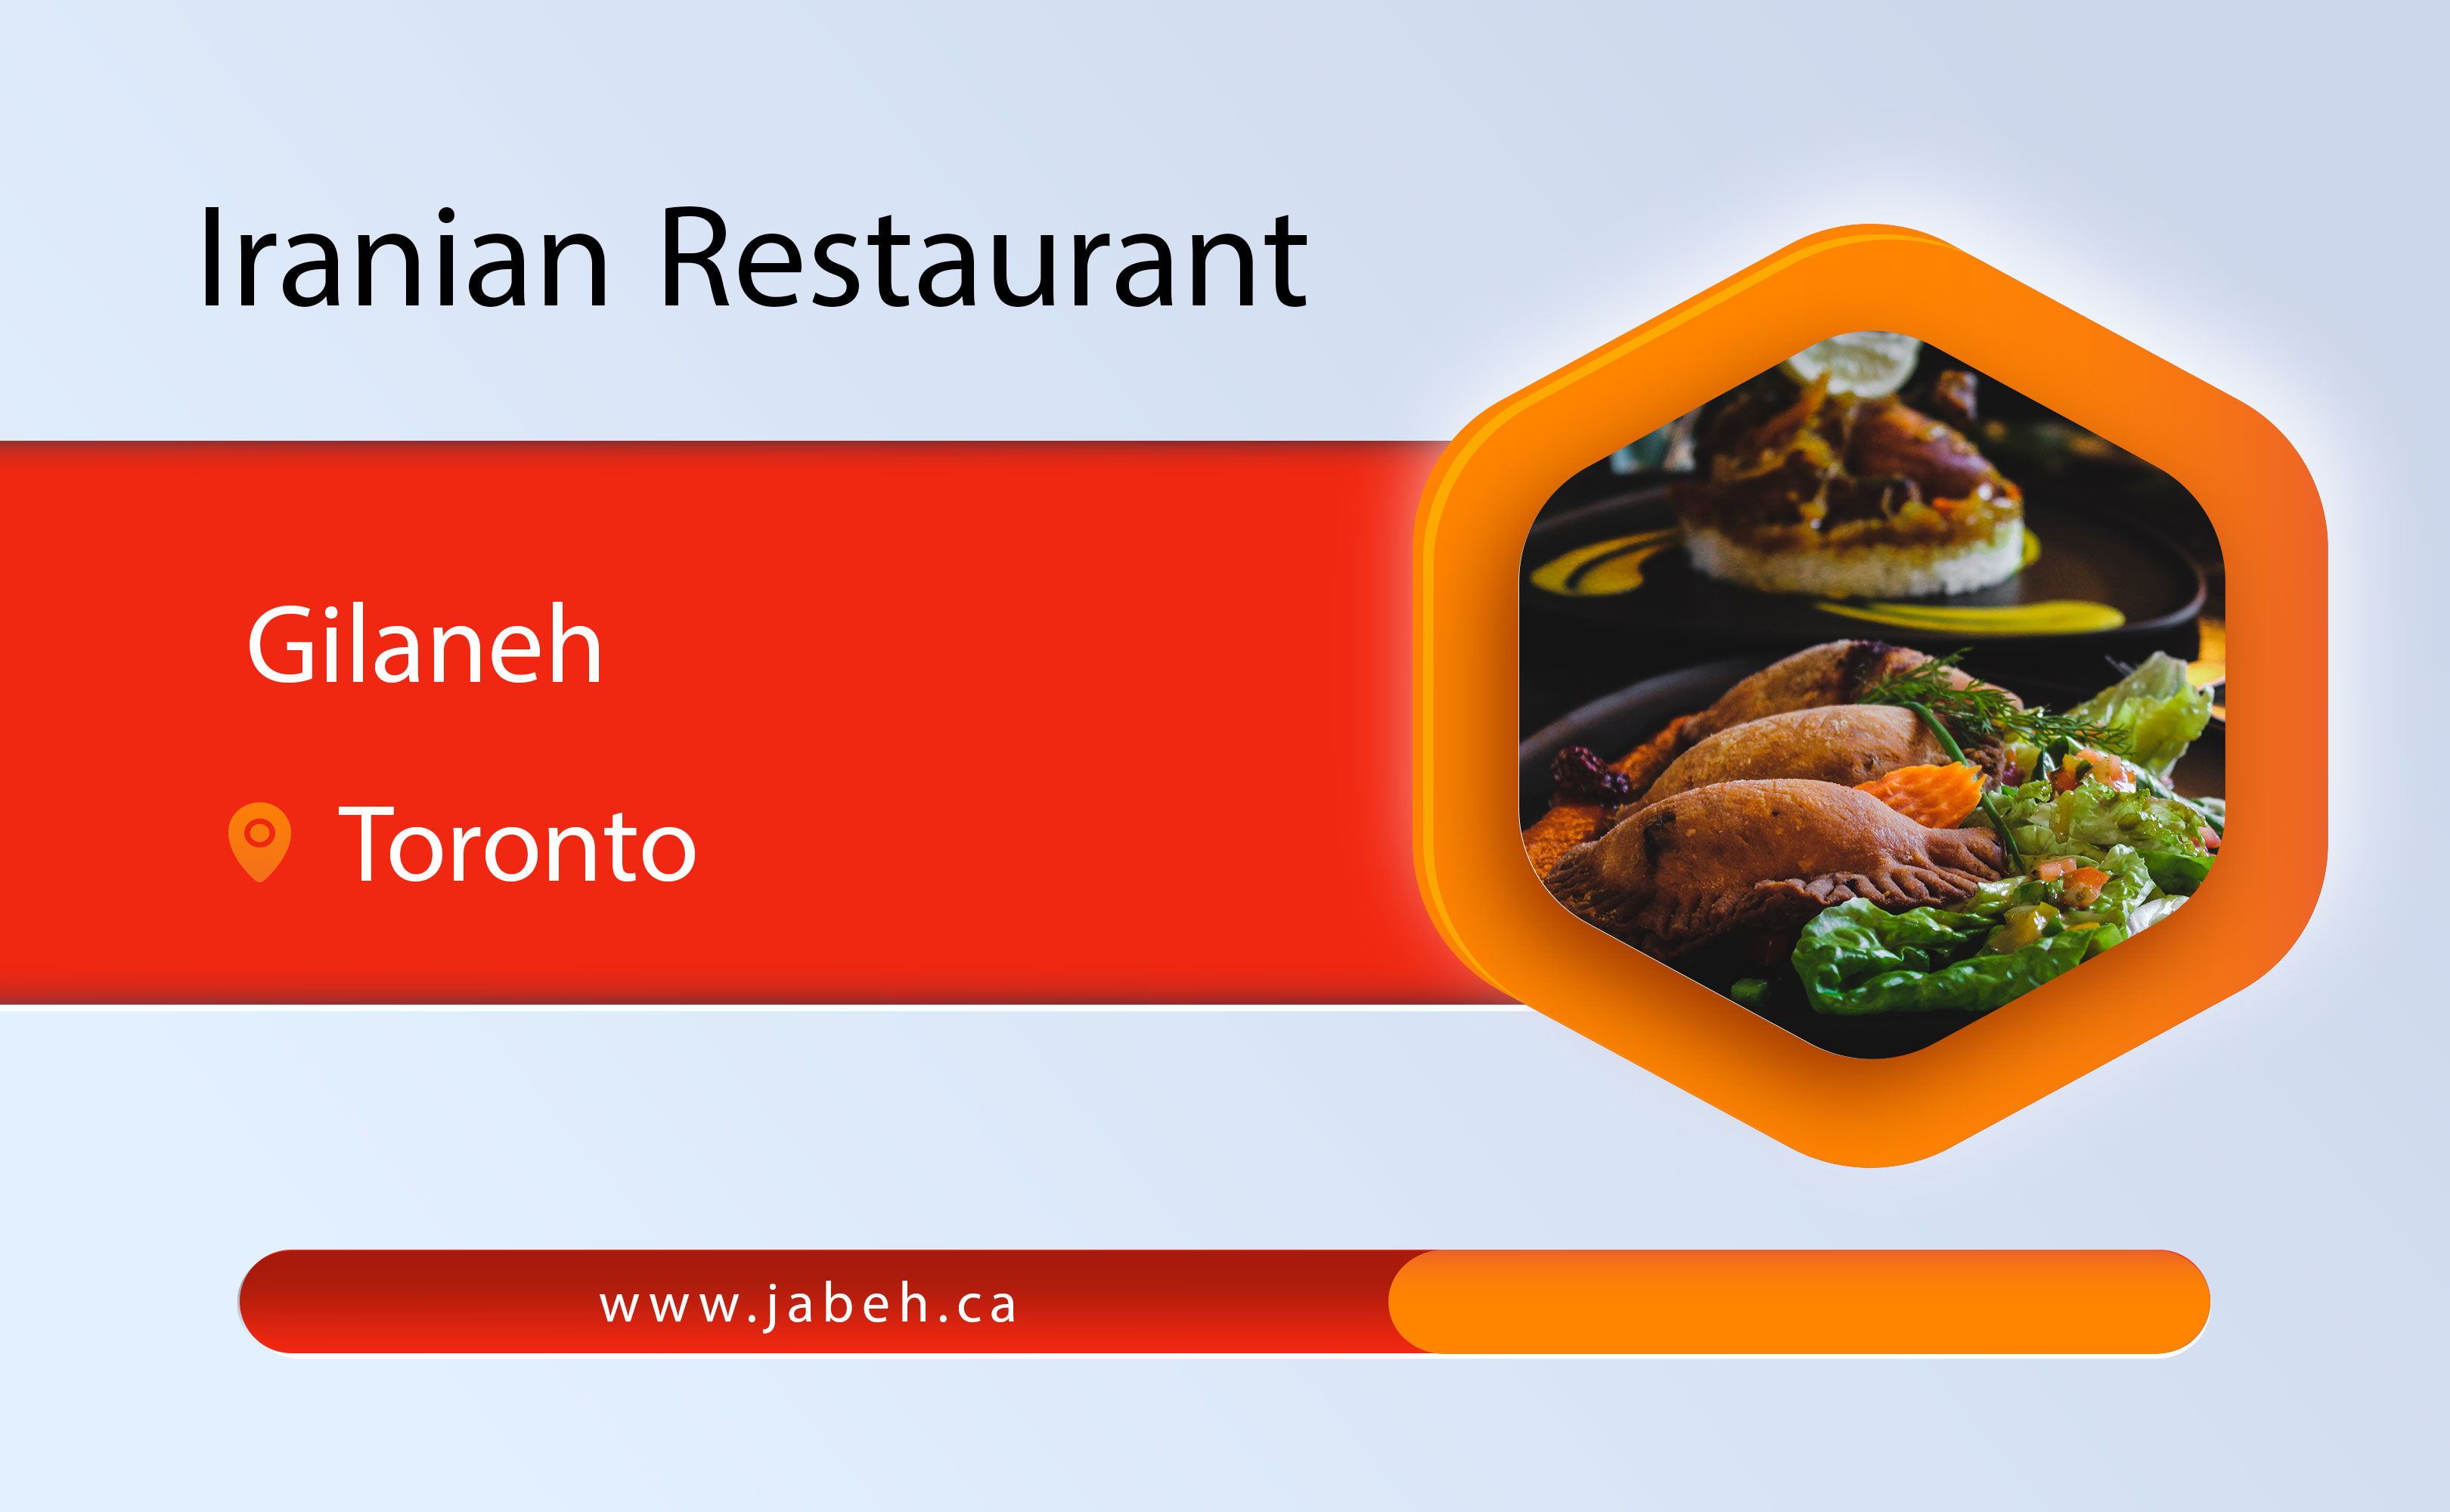 Gilaneh Iranian restaurant in Toronto